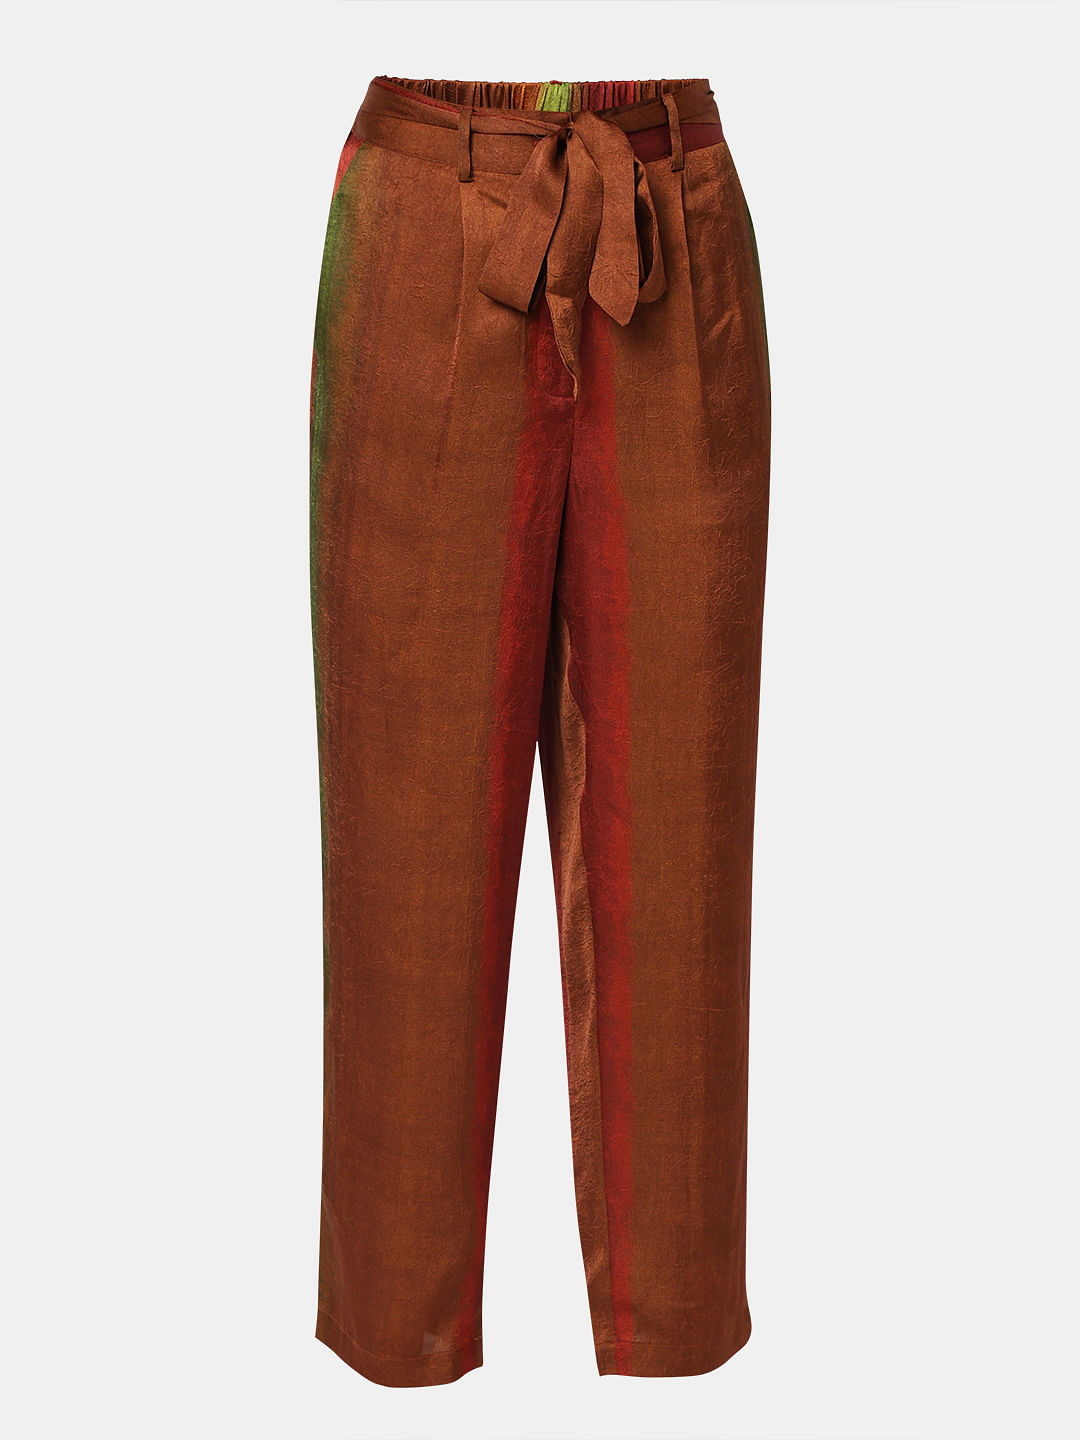 Womens High Waist Cotton Linen Trousers Ladies Casual Baggy Wide Leg Long  Pant | eBay